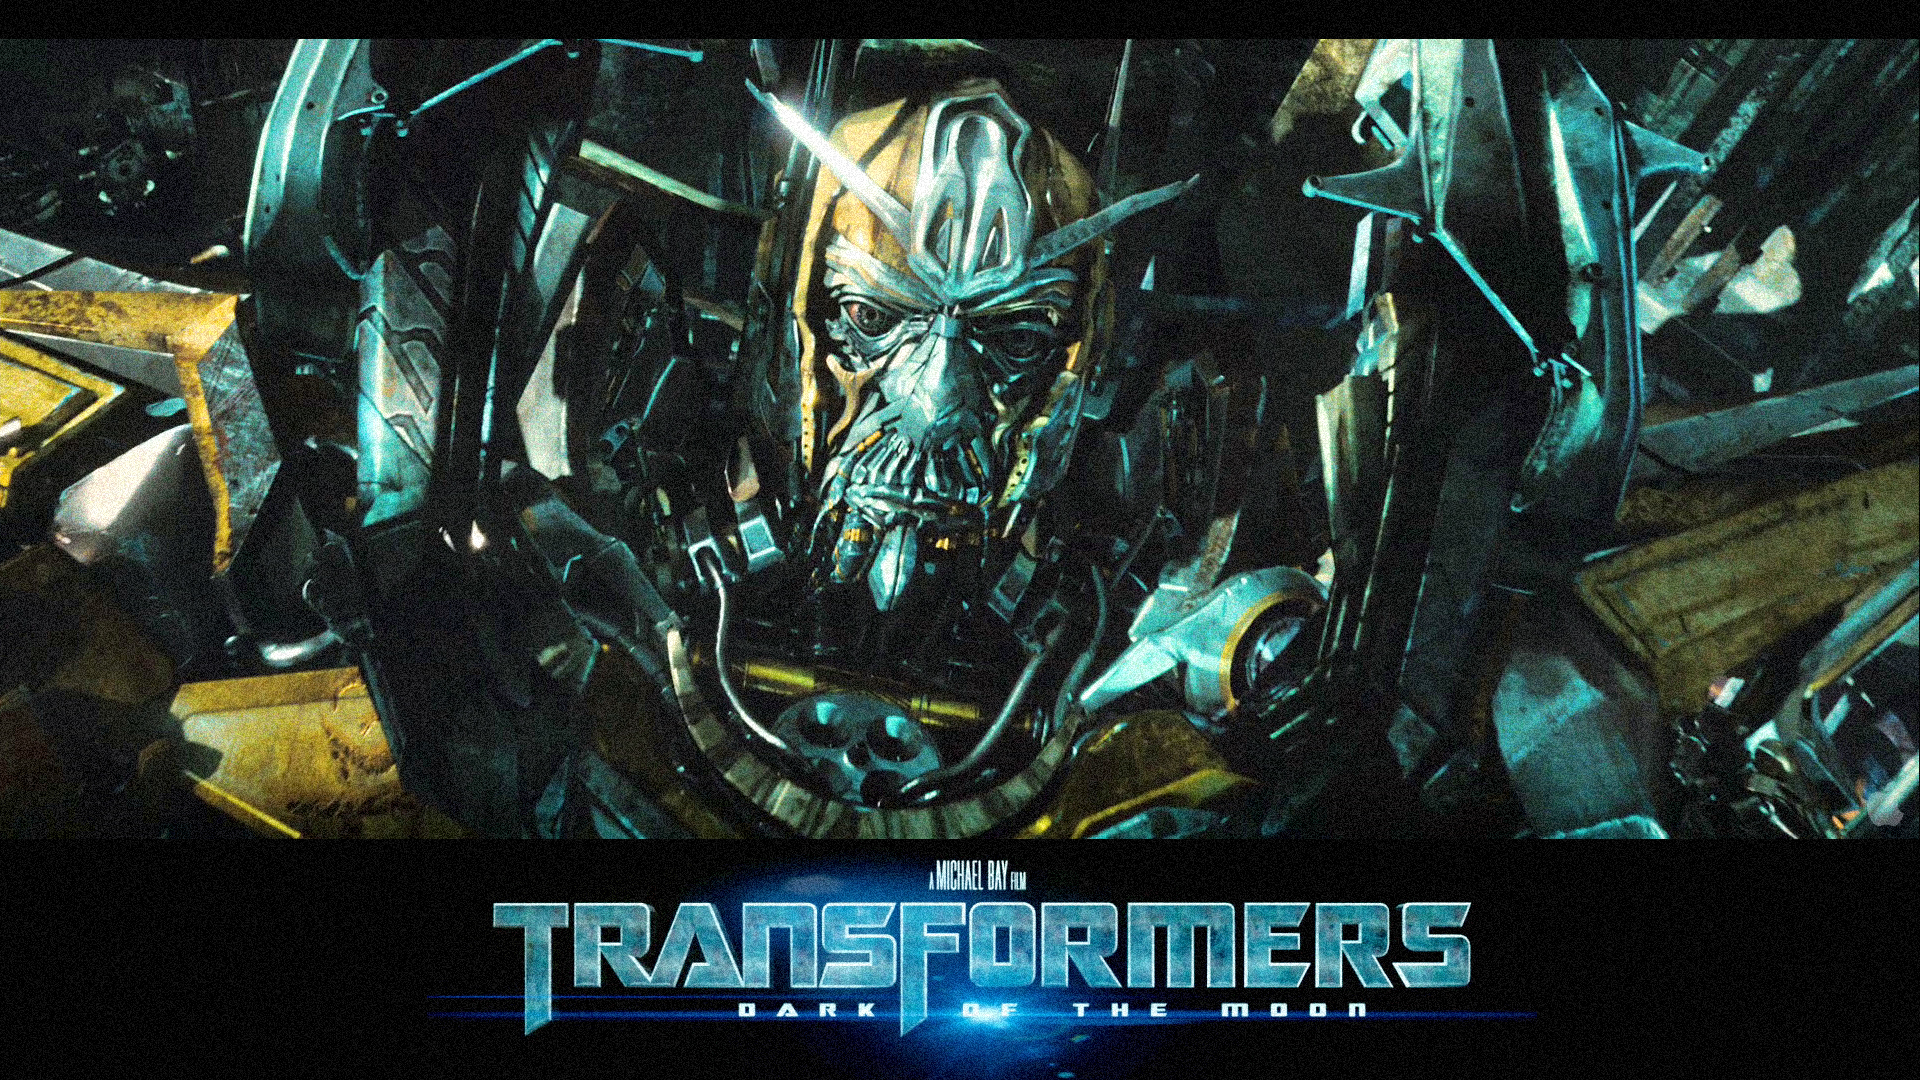 Dark of the moon - The Transformers Wallpaper (36926265) - Fanpop